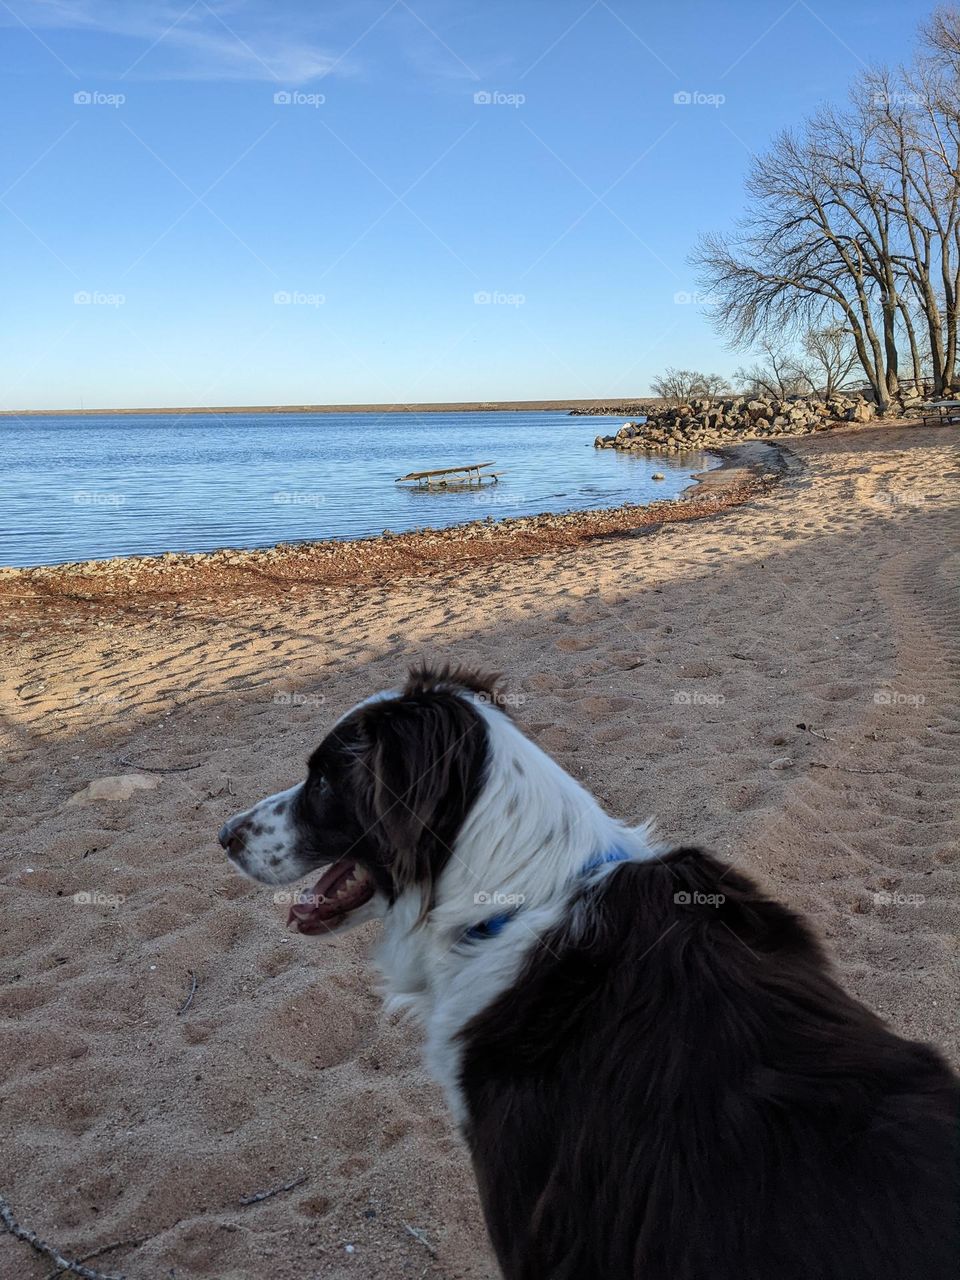 dog birdwatching by lake shore